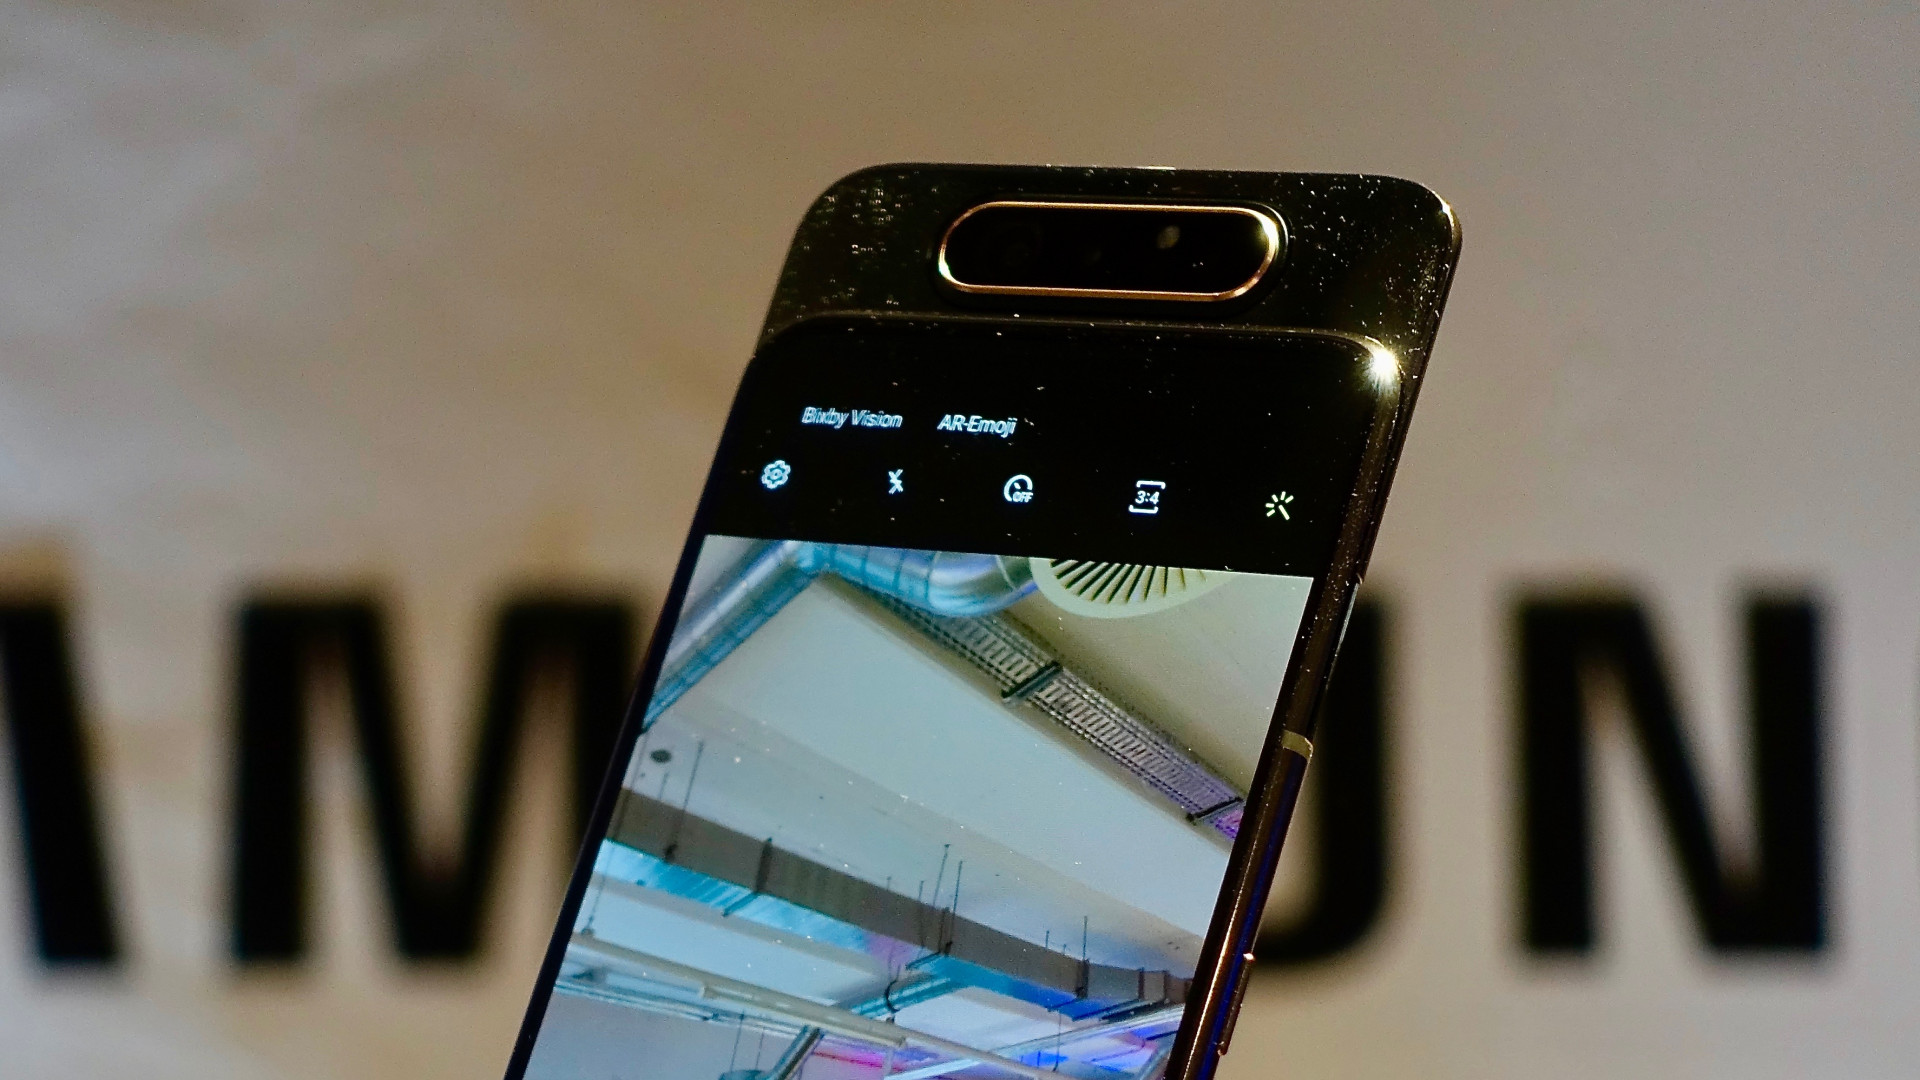 Samsung Galaxy A80 with motorized camera